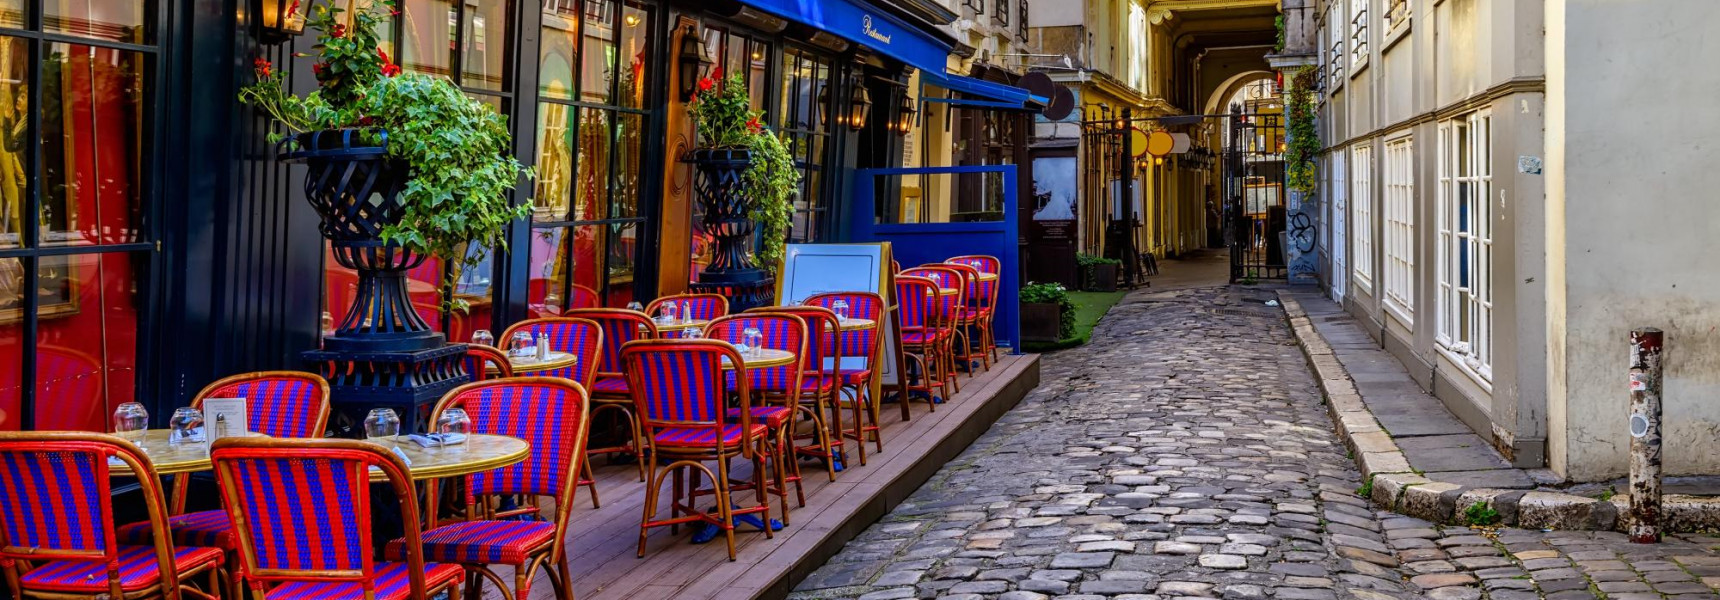 Top 5 French Restaurants in Paris